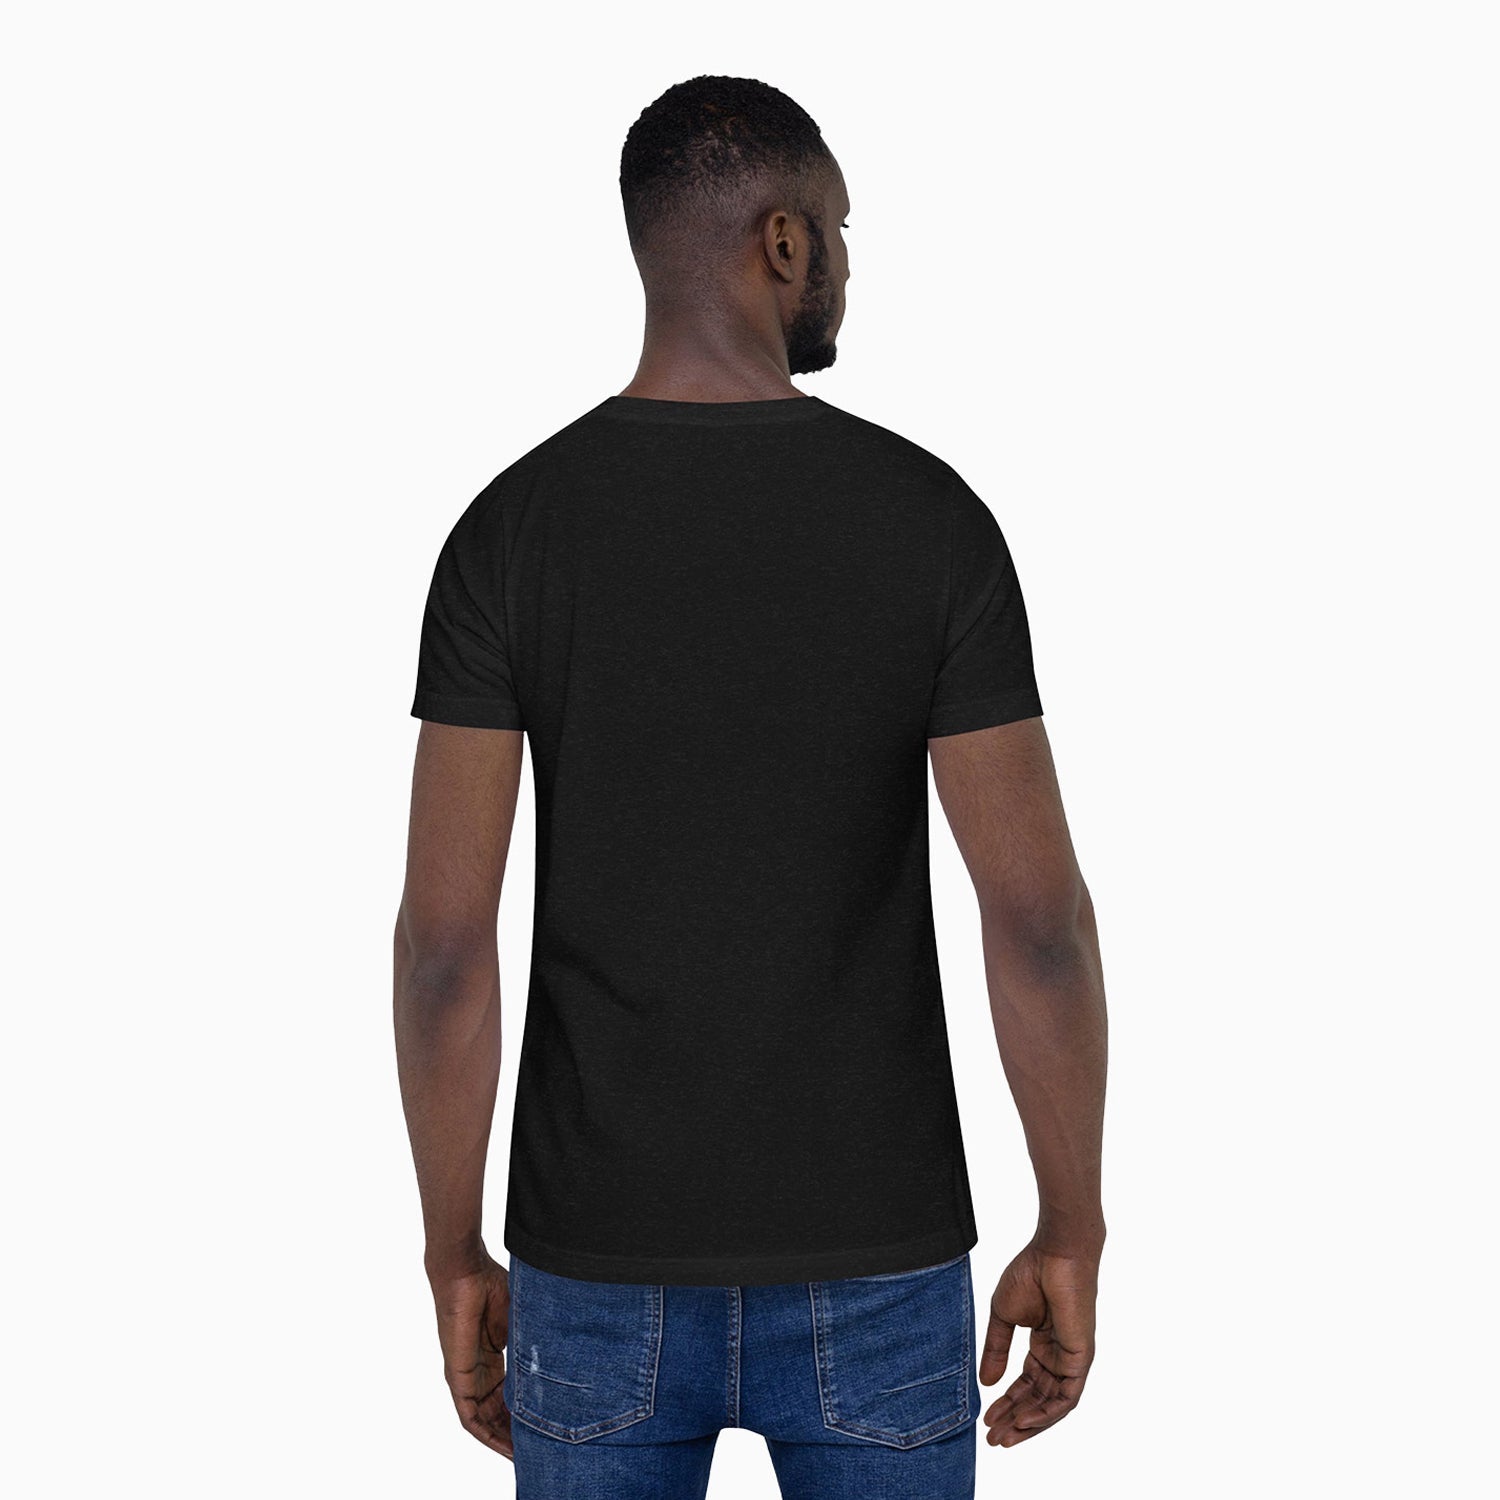 Savar Cut-off Design Printed Crew Neck Black T-Shirt For Men - Color: Black/ White Infrared - Tops and Bottoms USA -